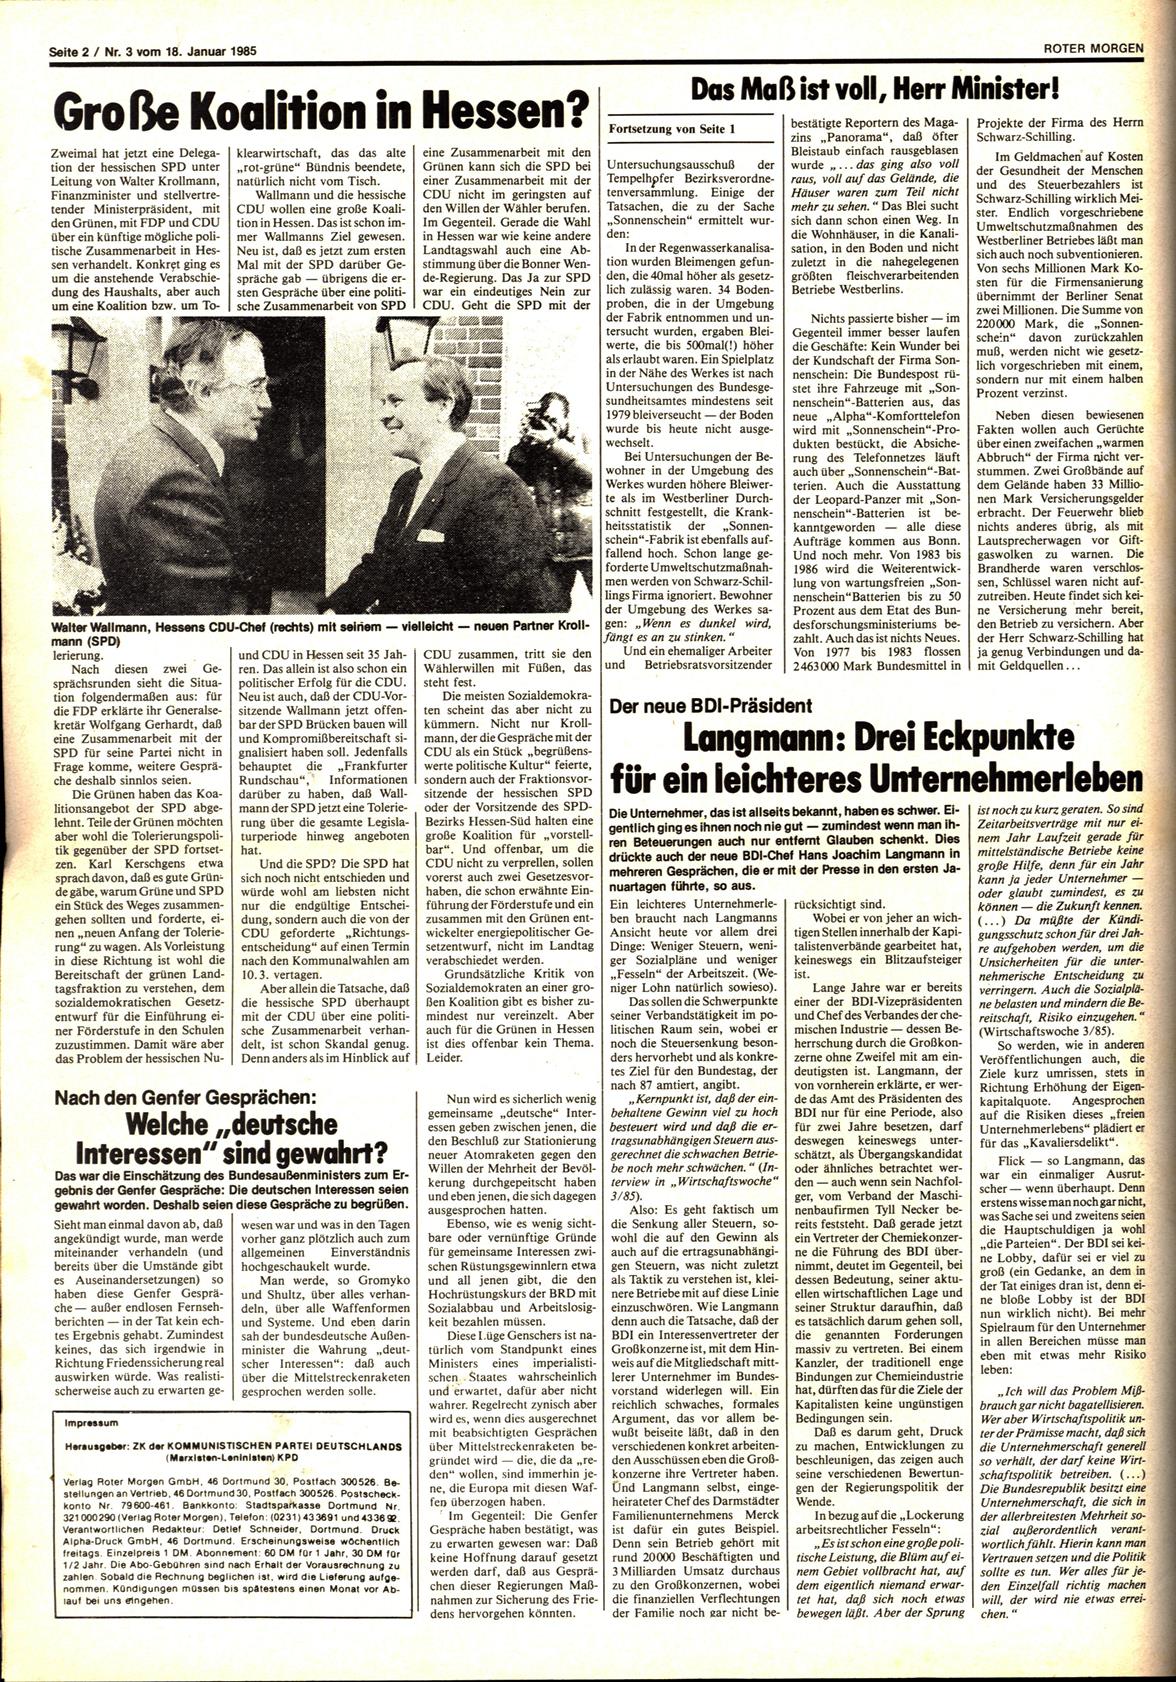 Roter Morgen, 19. Jg., 18. Januar 1985, Nr. 3, Seite 2